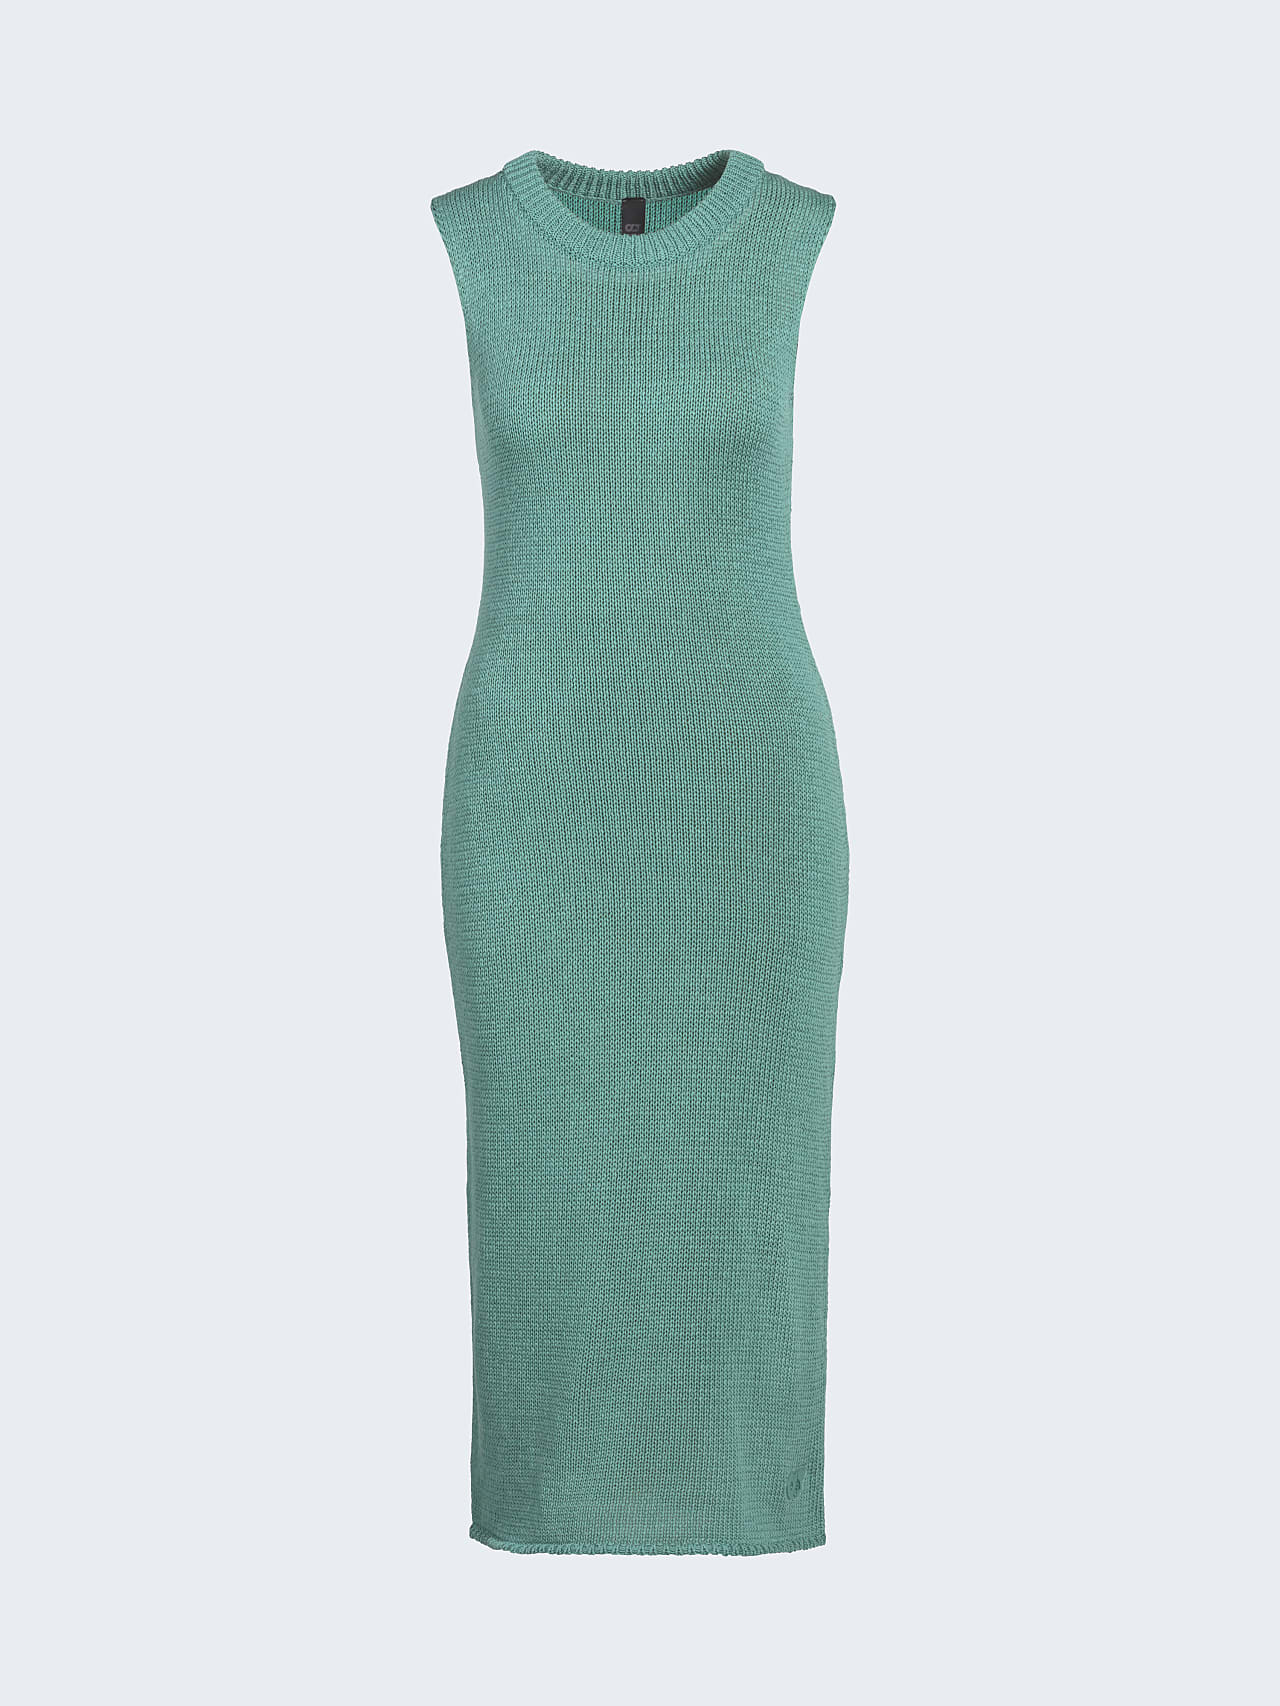 AlphaTauri | FOUDI V1.Y6.01 | Colourblock Knit Tube Dress in turquoise for Women